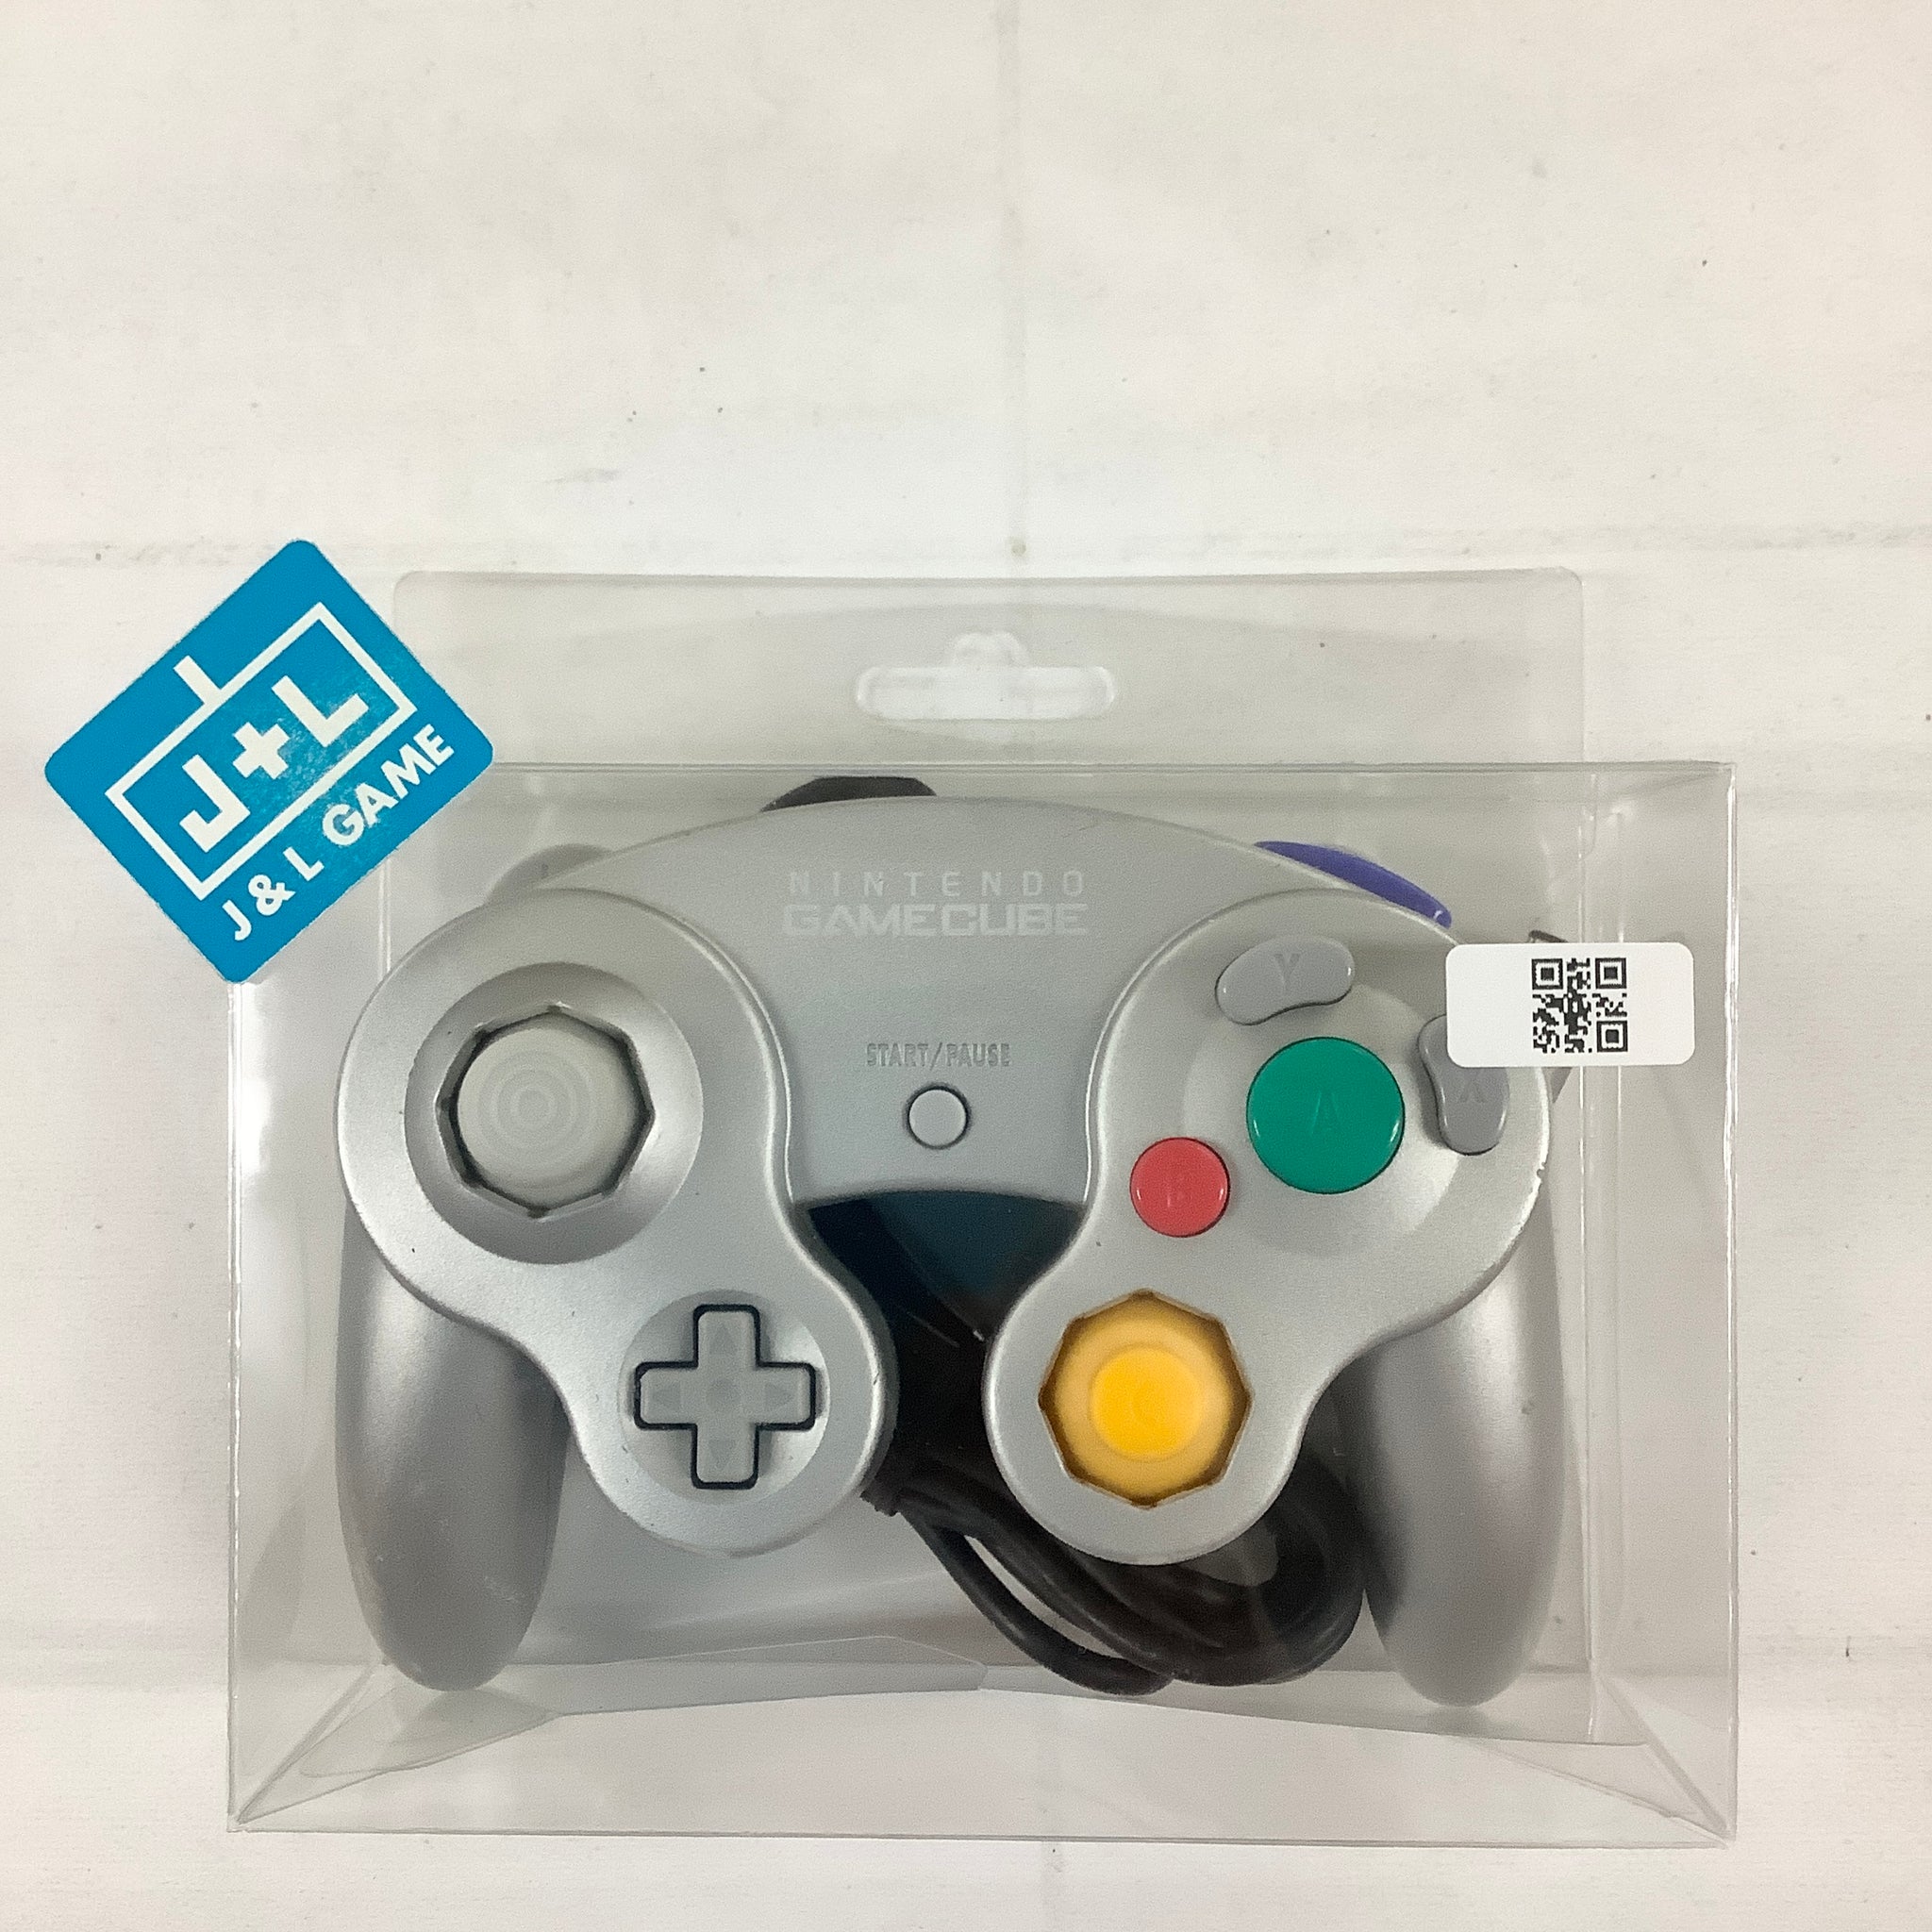 Nintendo GameCube Controller (Silver) - (GC) GameCube [Pre-Owned] Accessories Nintendo   